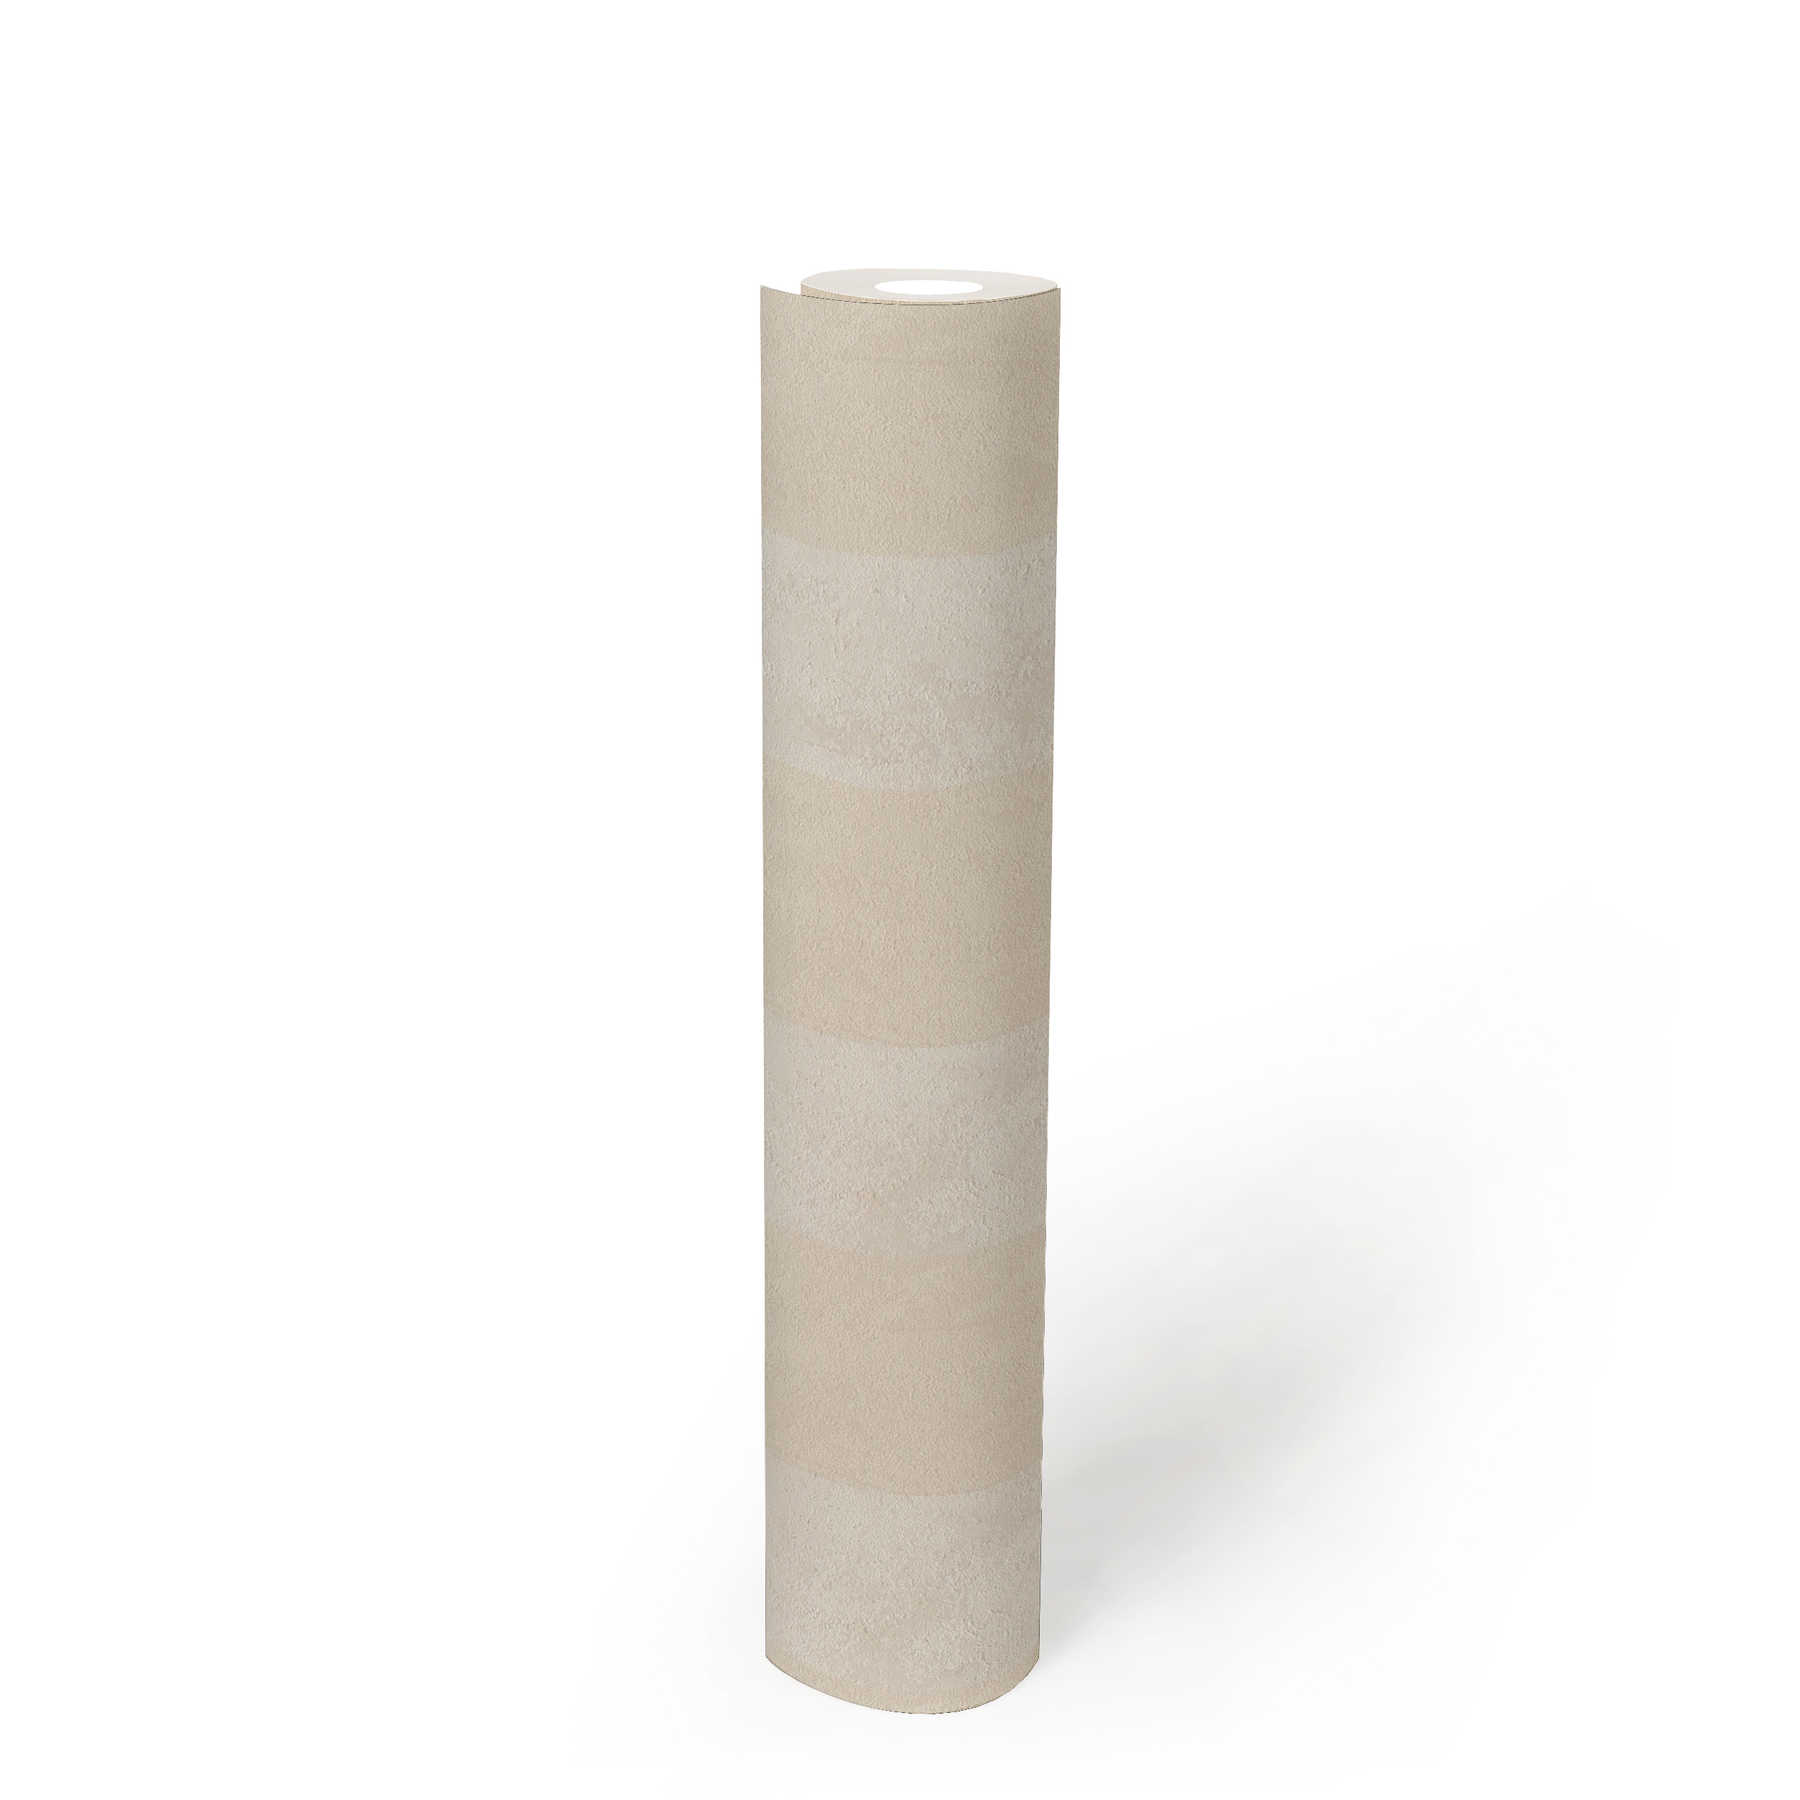             Non-woven wallpaper plaster look & stripe design - beige
        